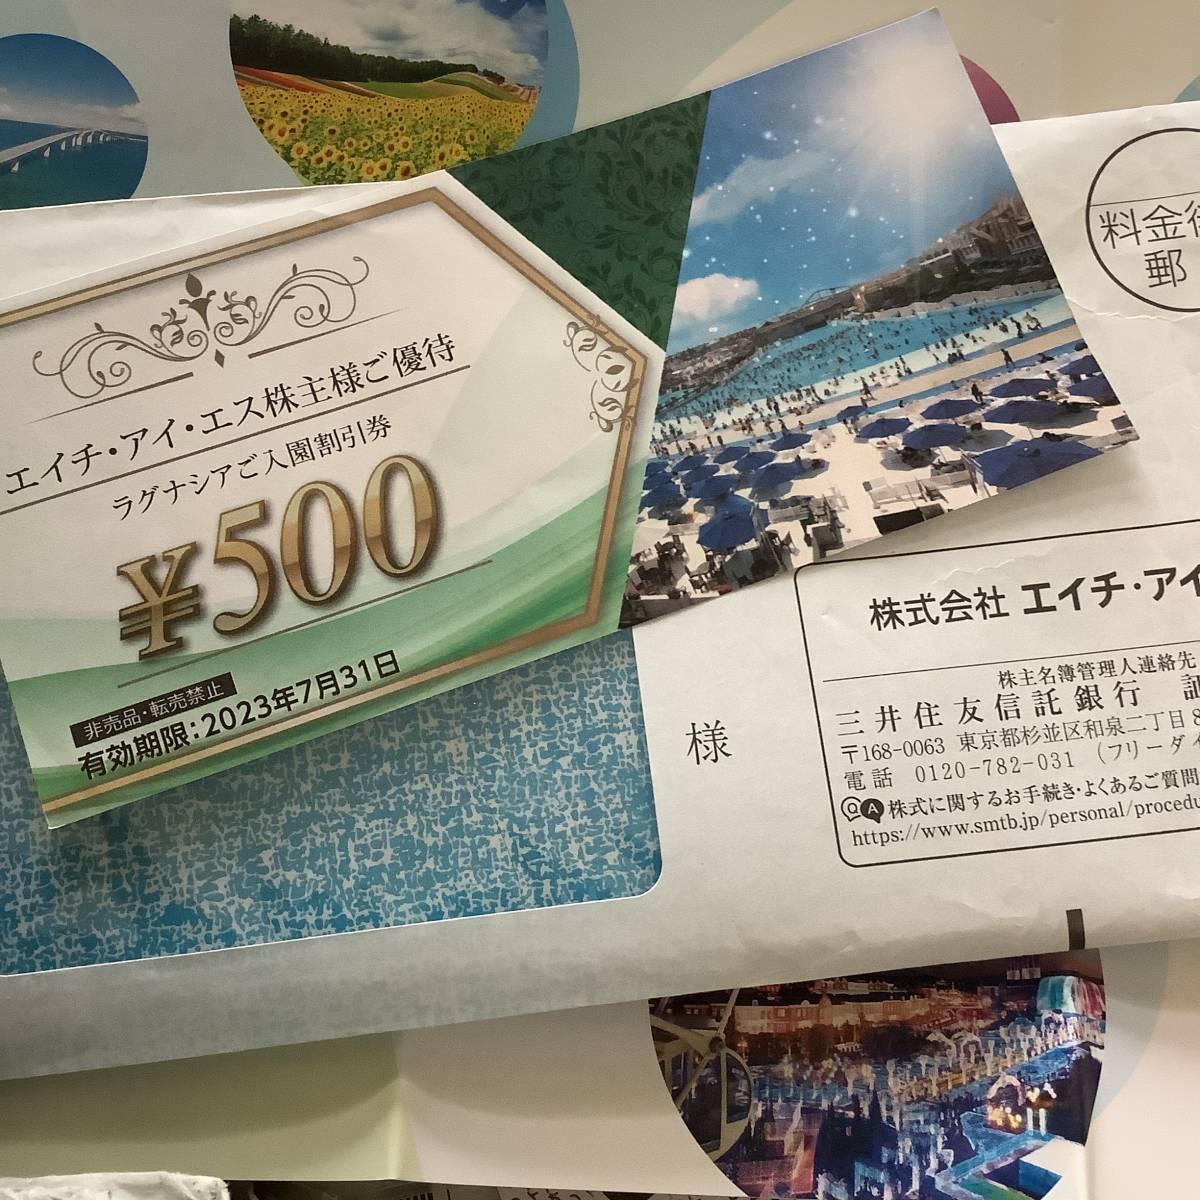 HIS 株主ご優待券 ラグナシア入園割引券 500円券1枚  5.7.31